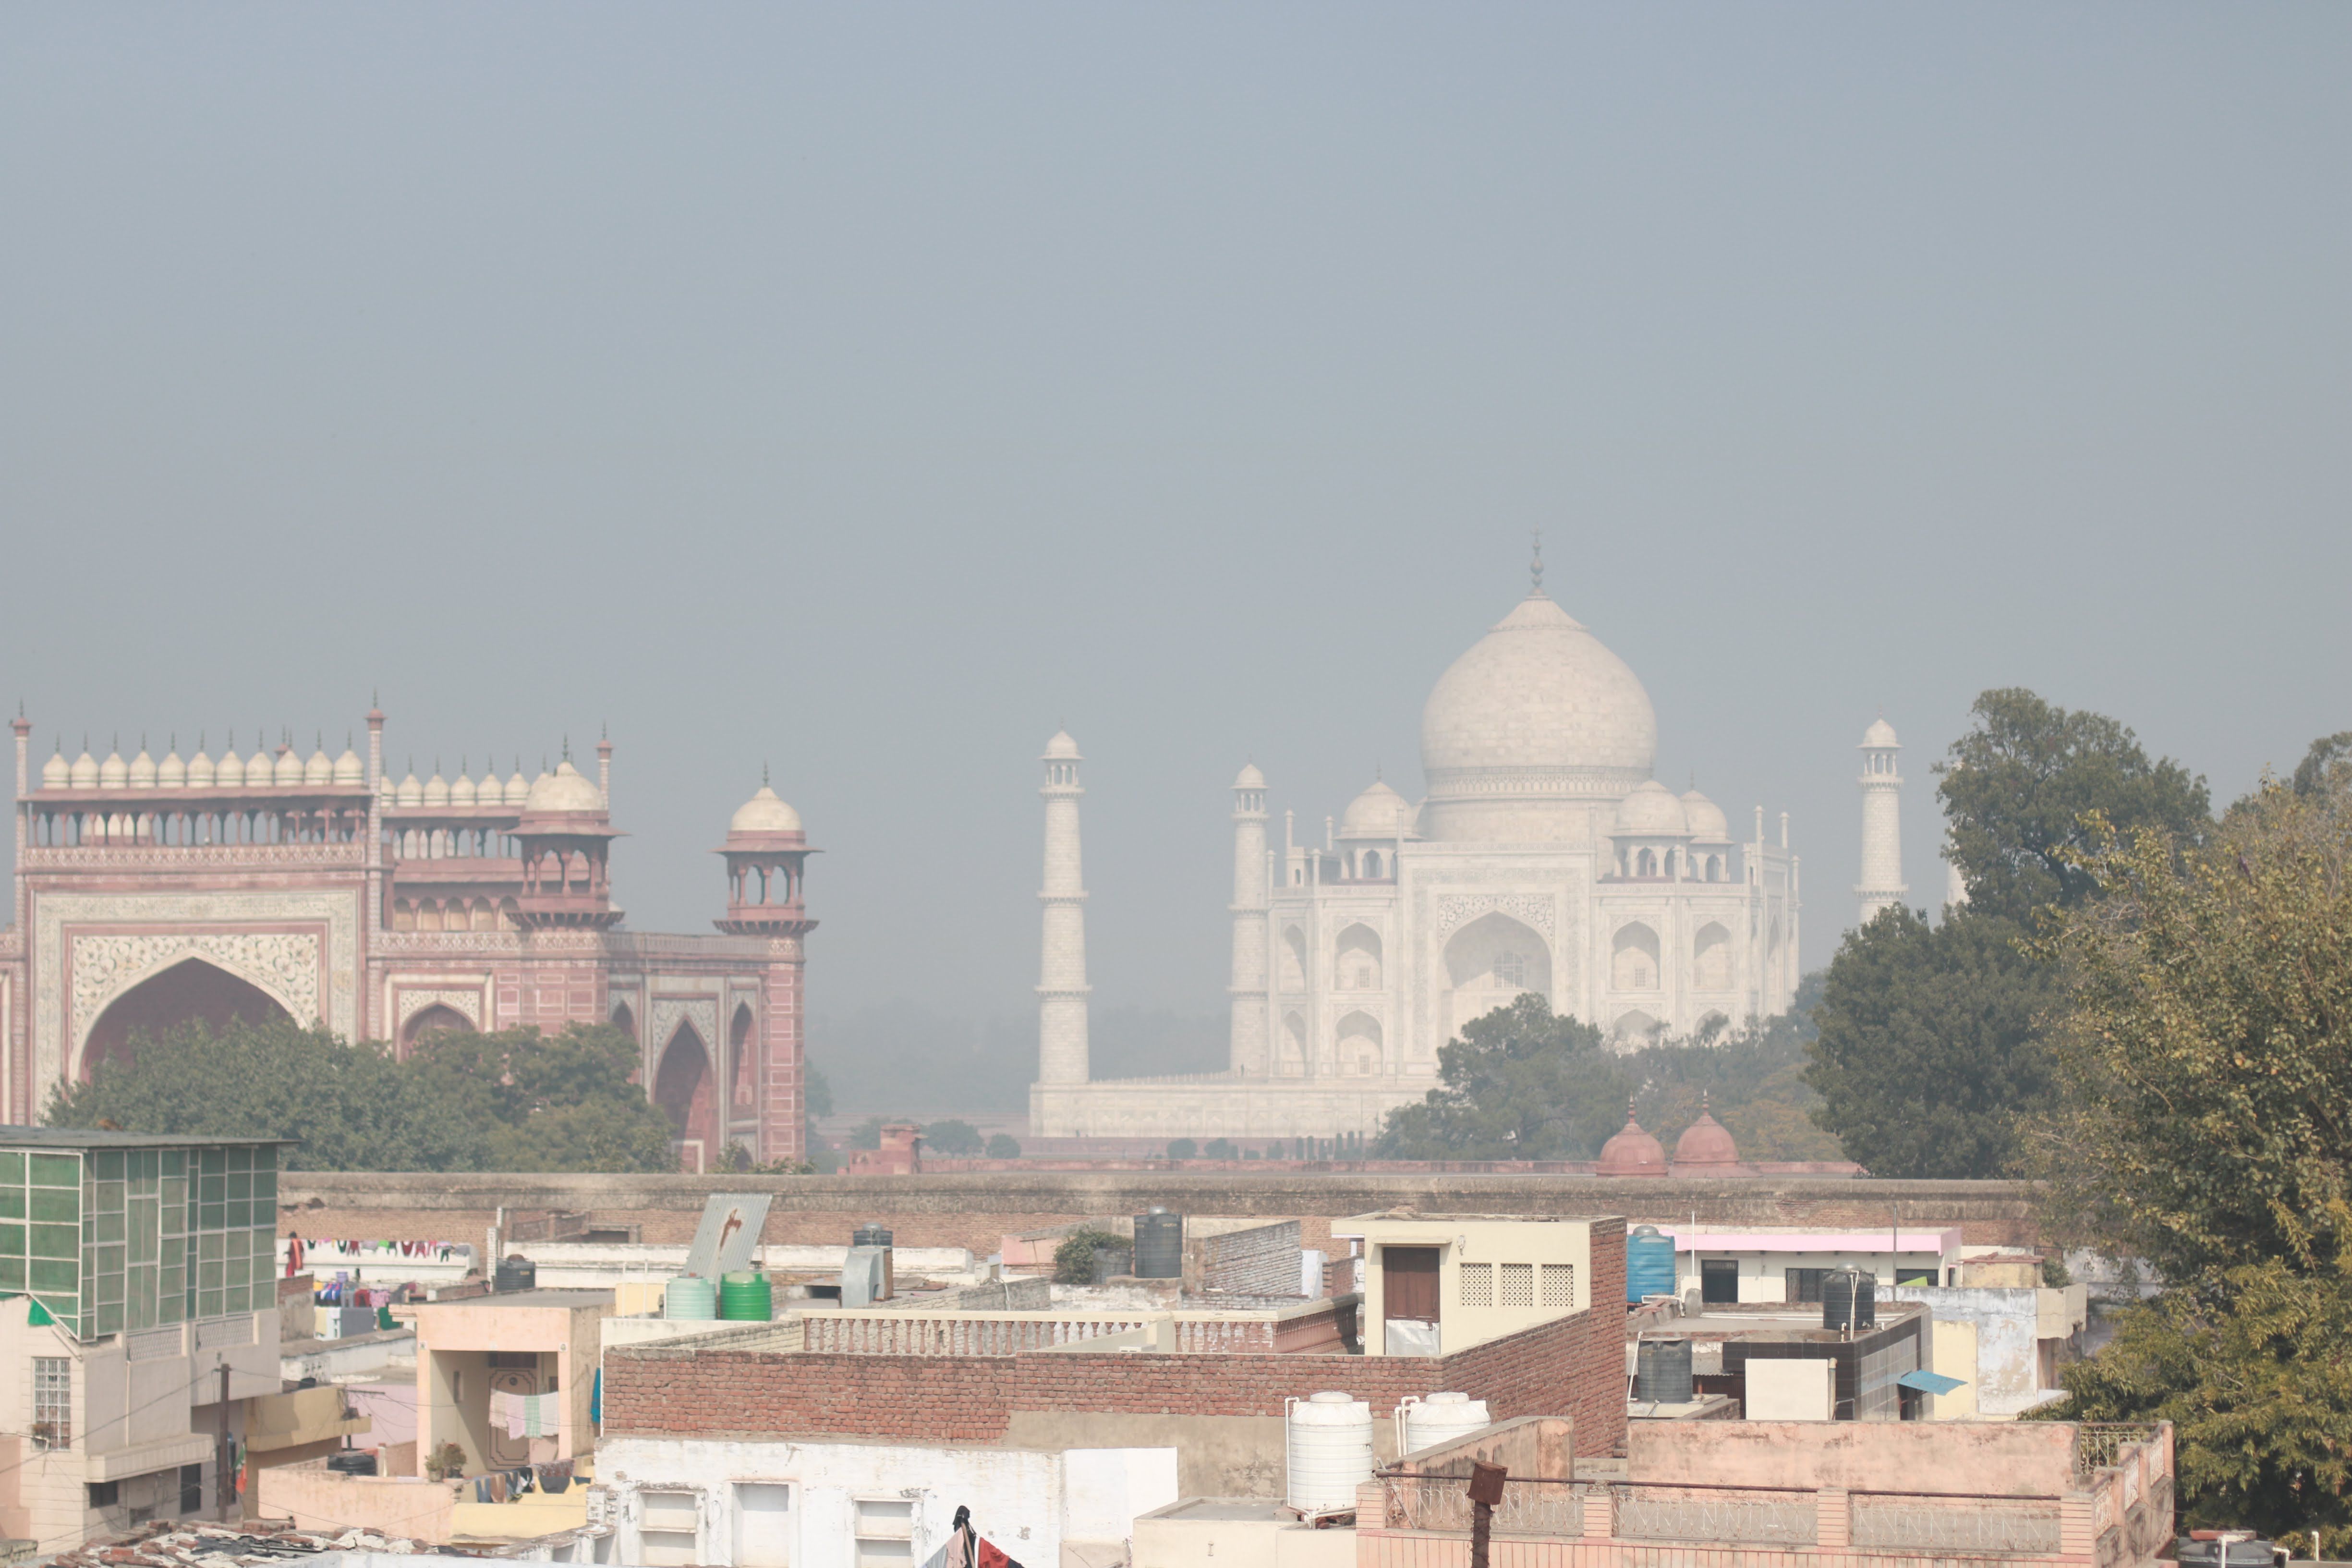 Alternative ways to see the Taj Mahal